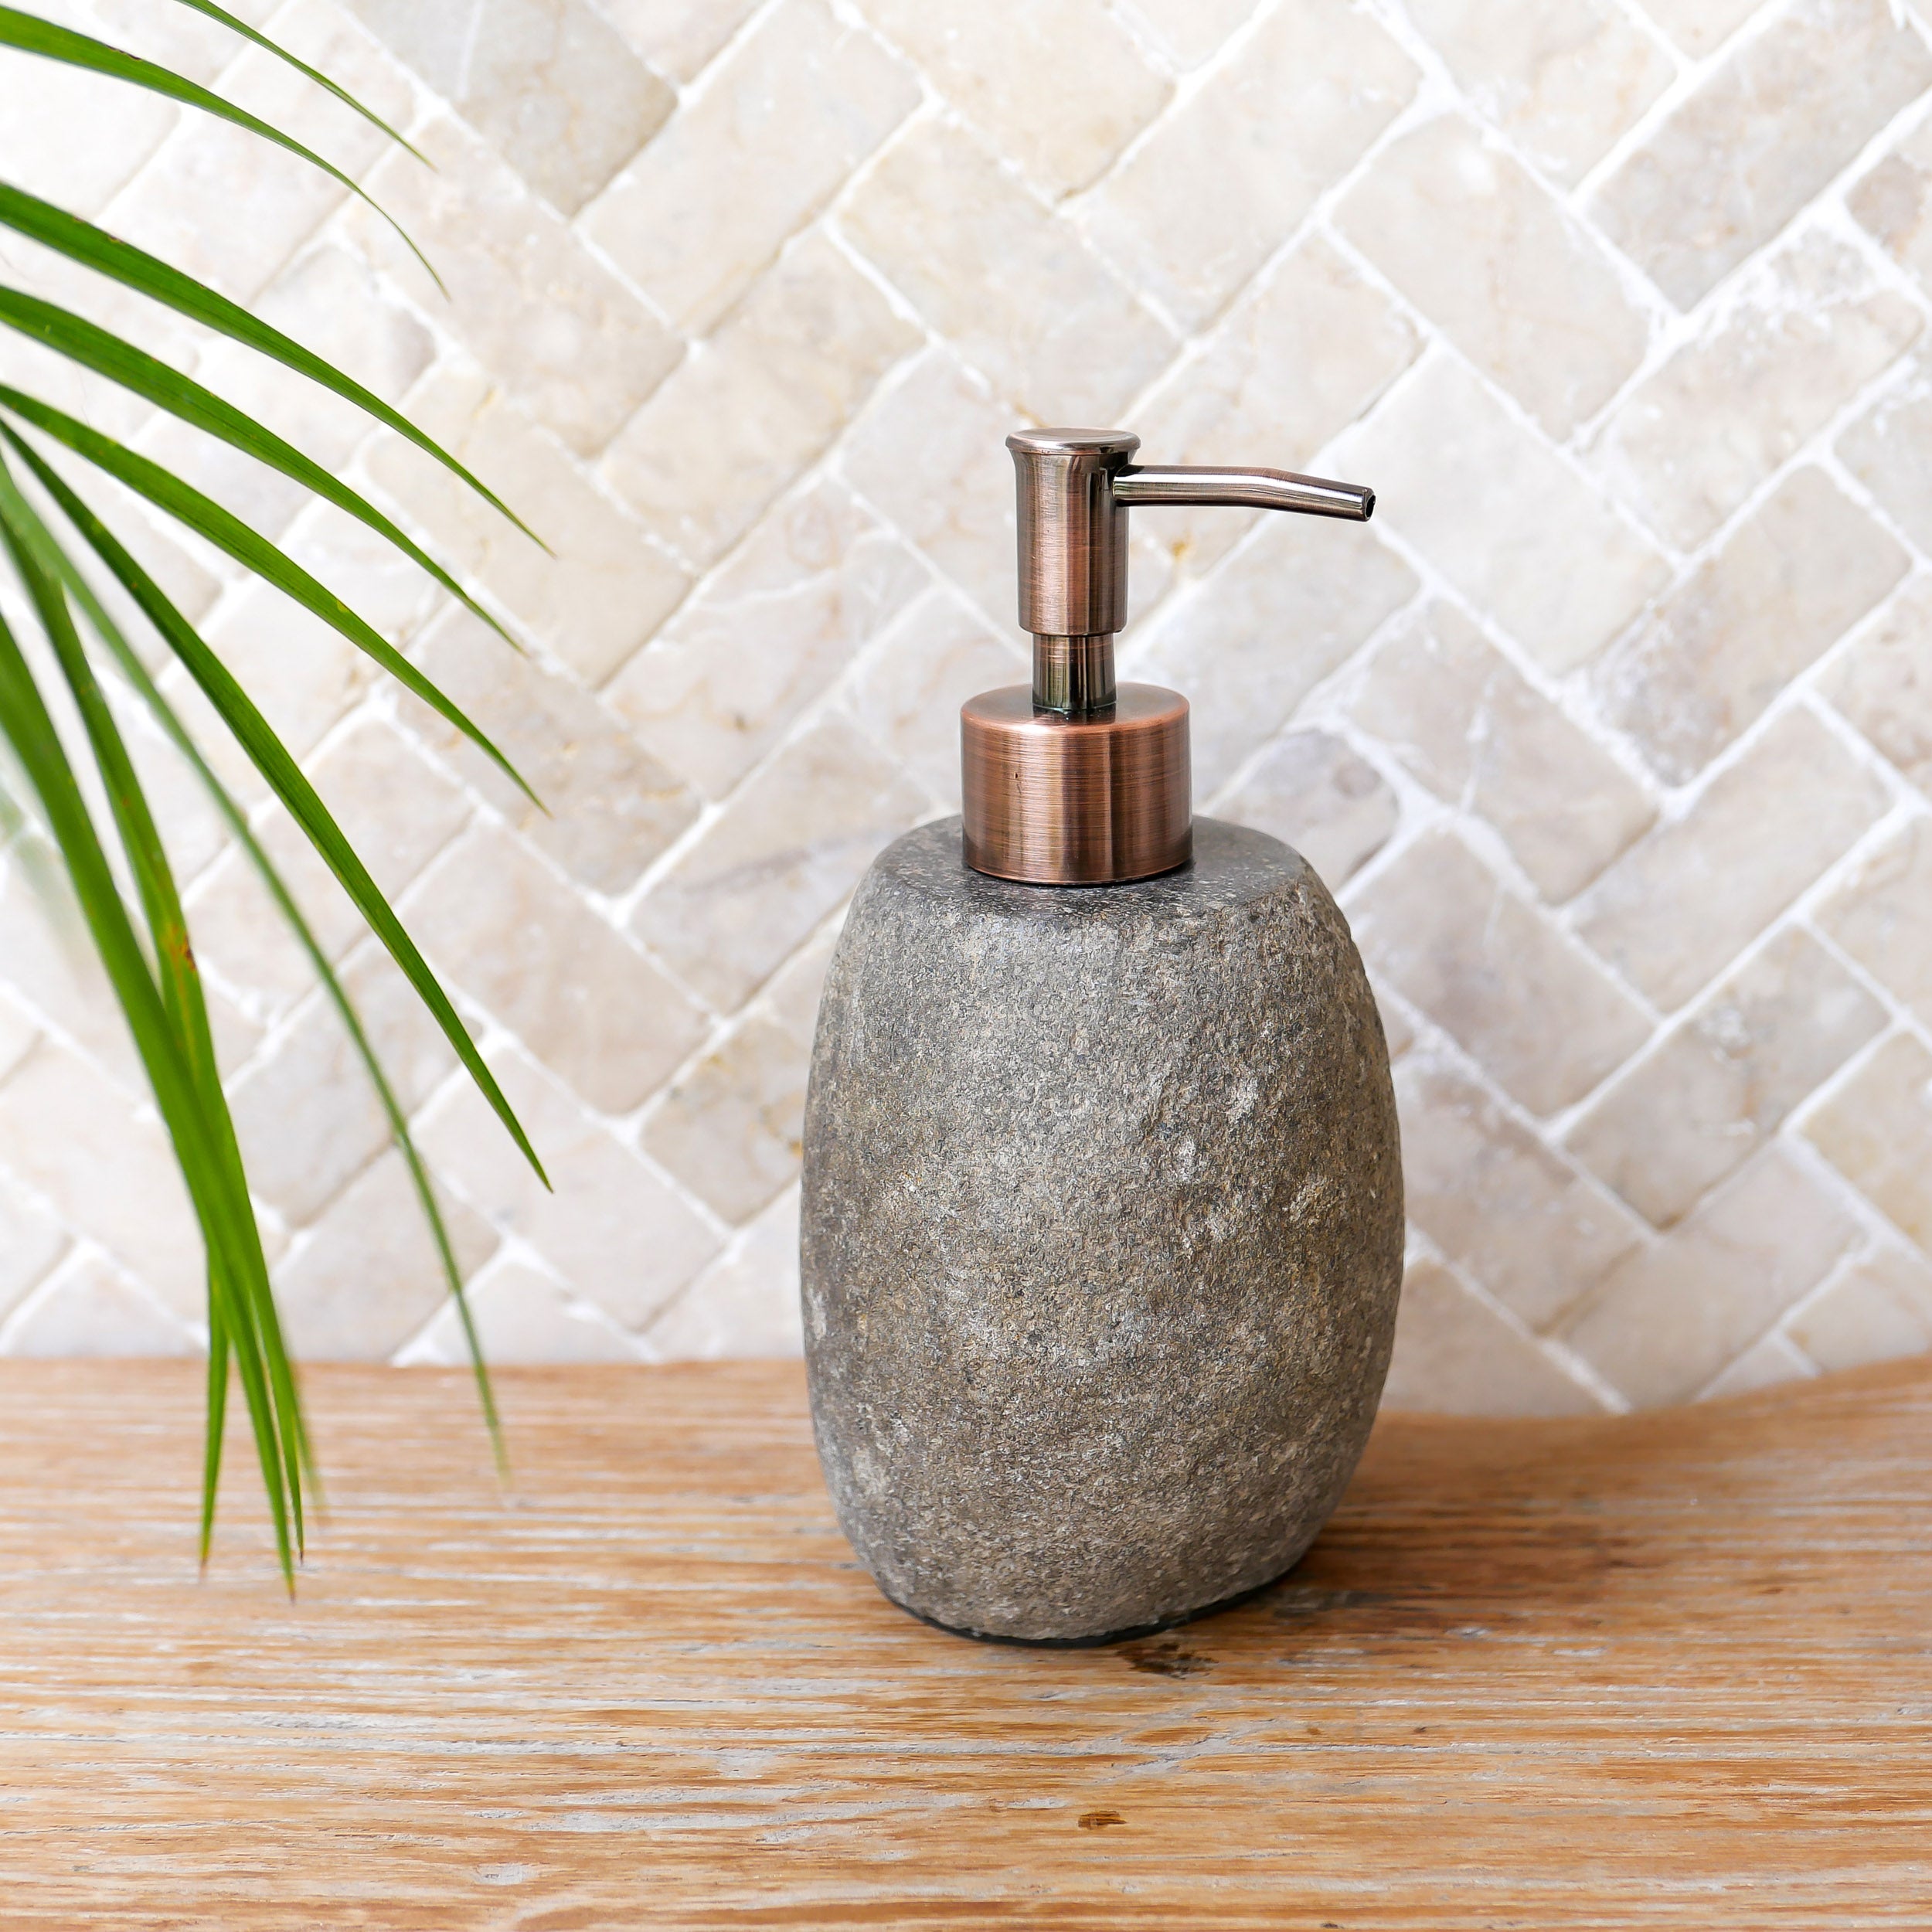 River stone soap dispenser - Joglo Living